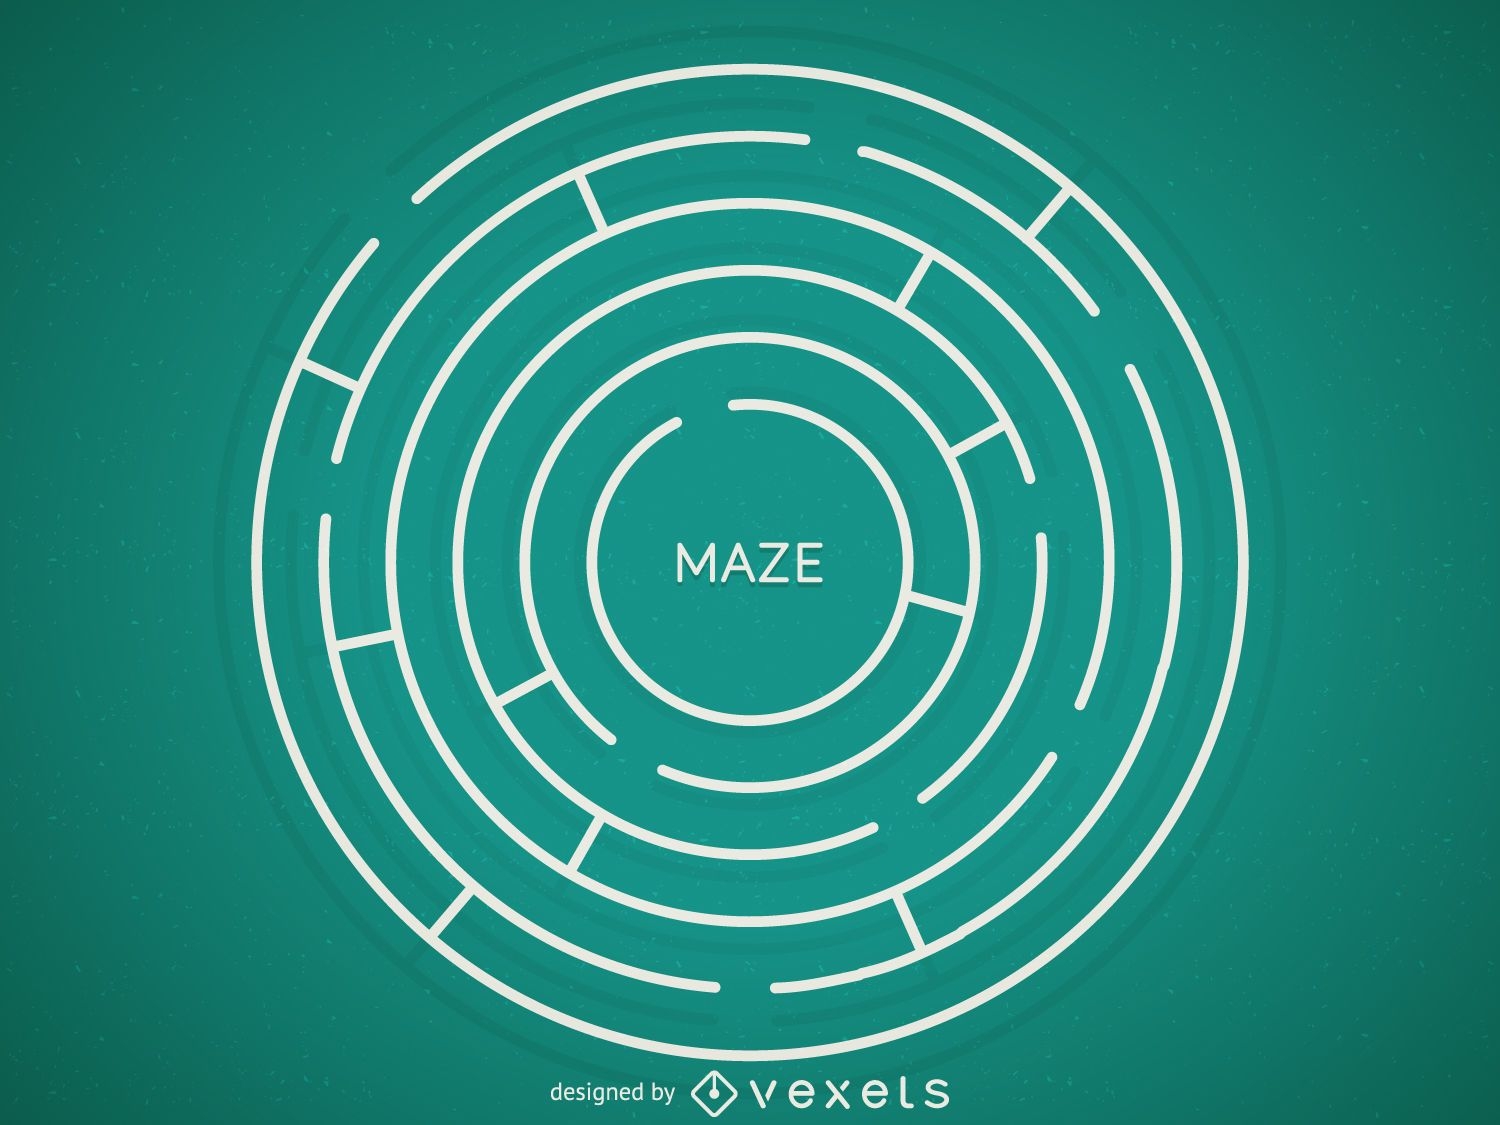 Round maze illustration